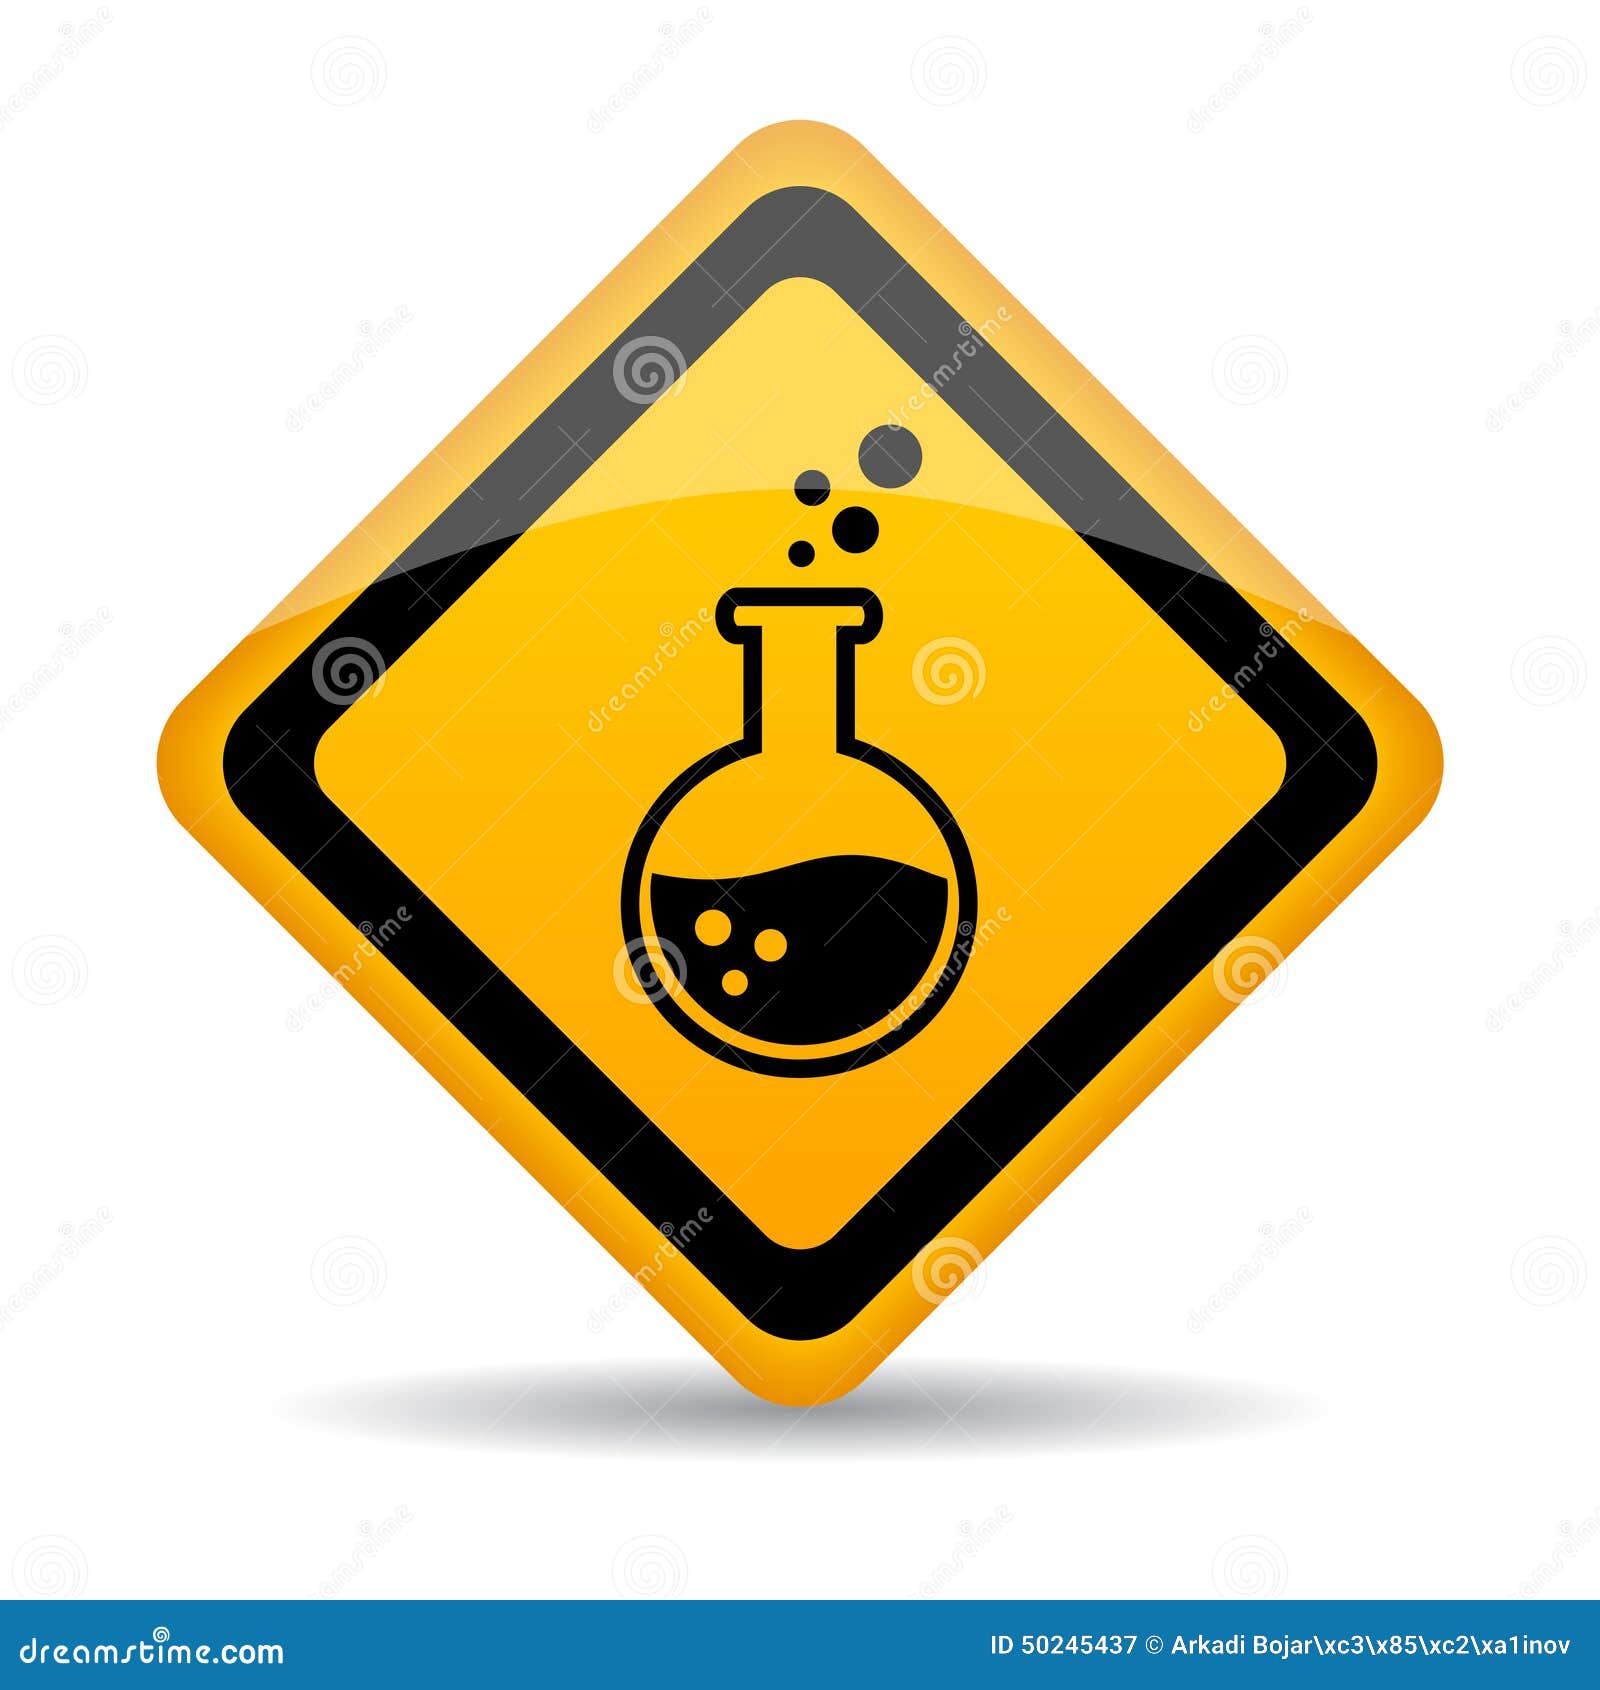  Danger  Chemicals Warning Sign  Stock Vector Illustration 